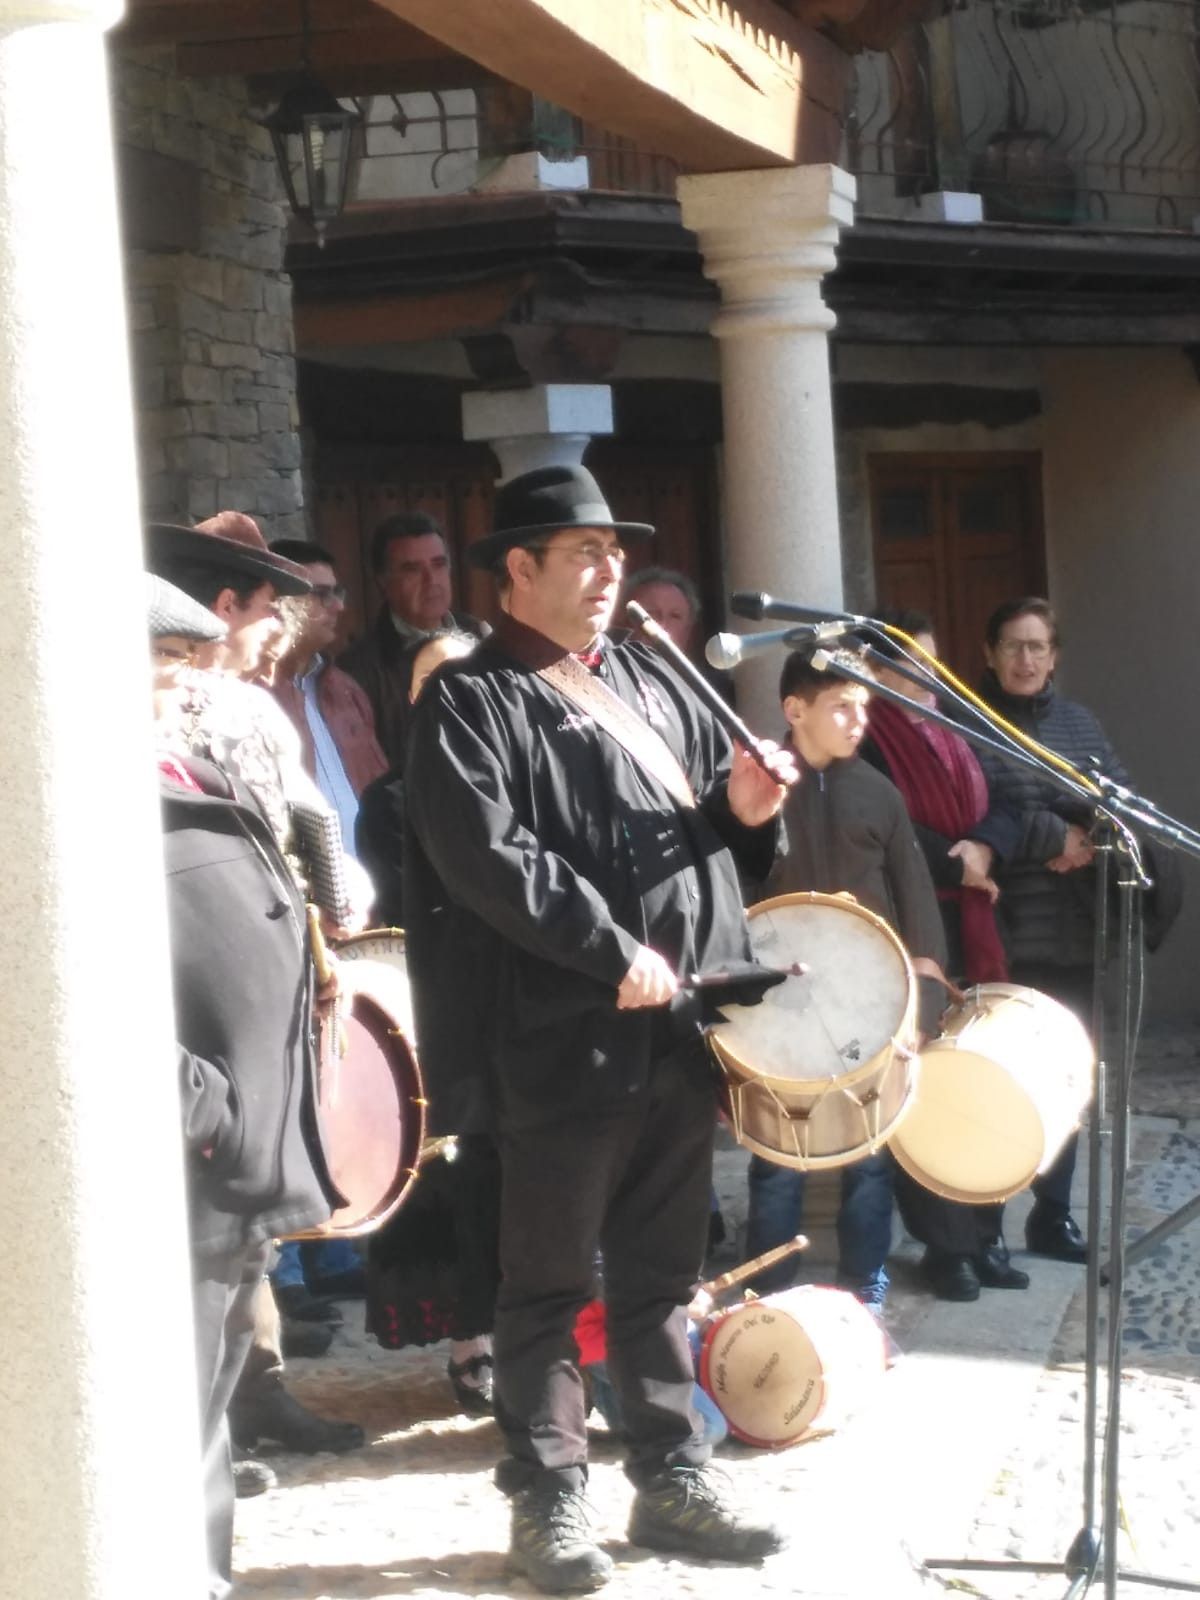  Festival de tamborileros en valero (1) 